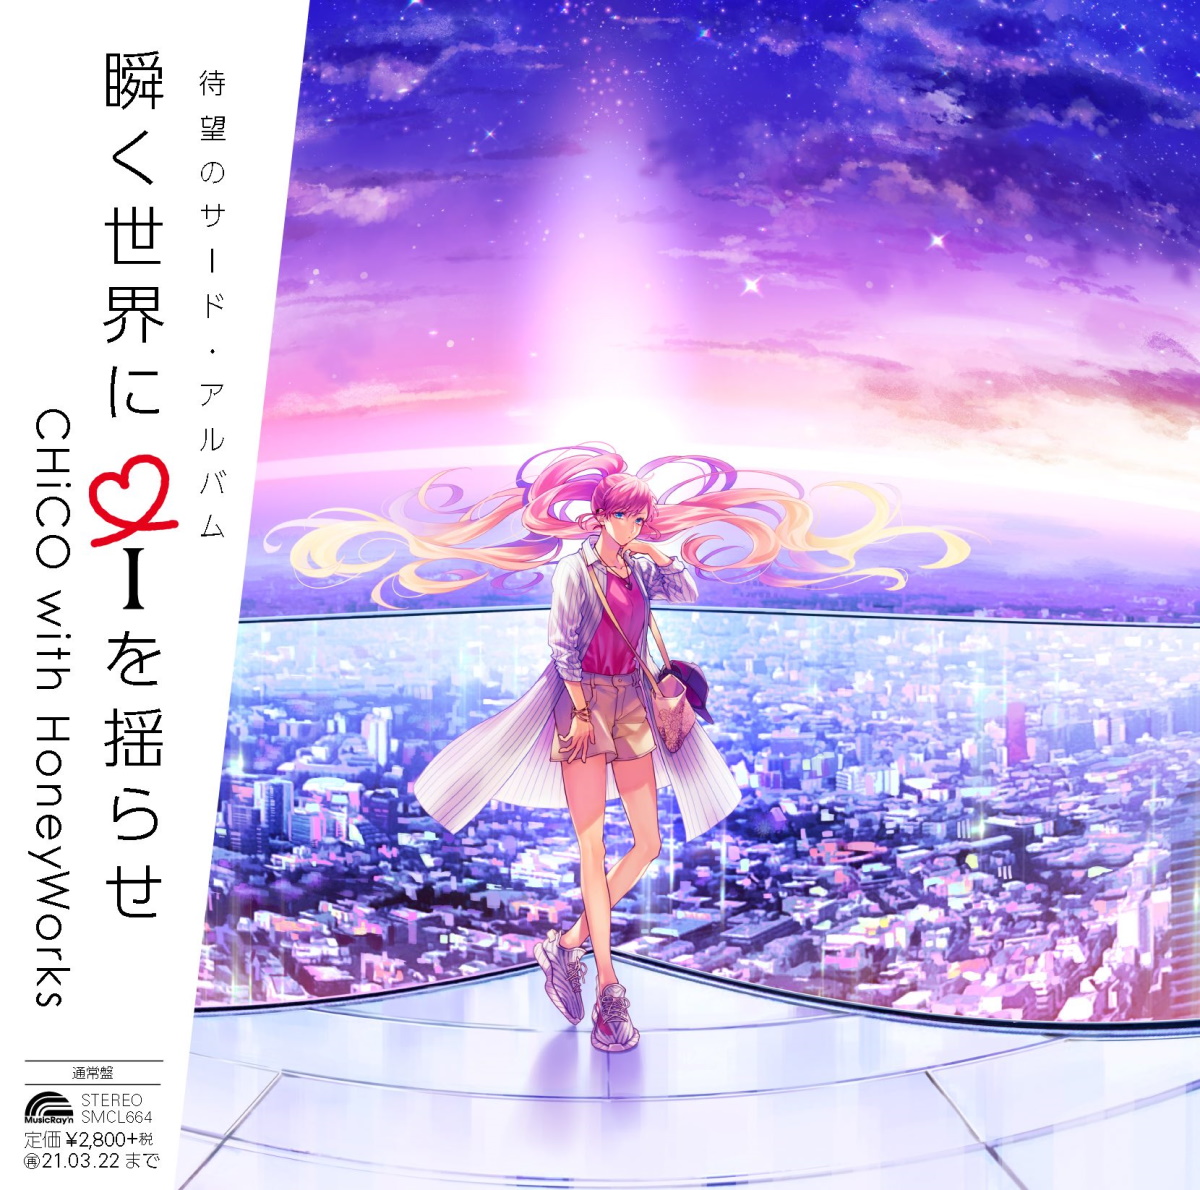 Cover for『CHiCO with HoneyWorks - Shiawase』from the release『Matataku Sekai ni i wo Yurase』